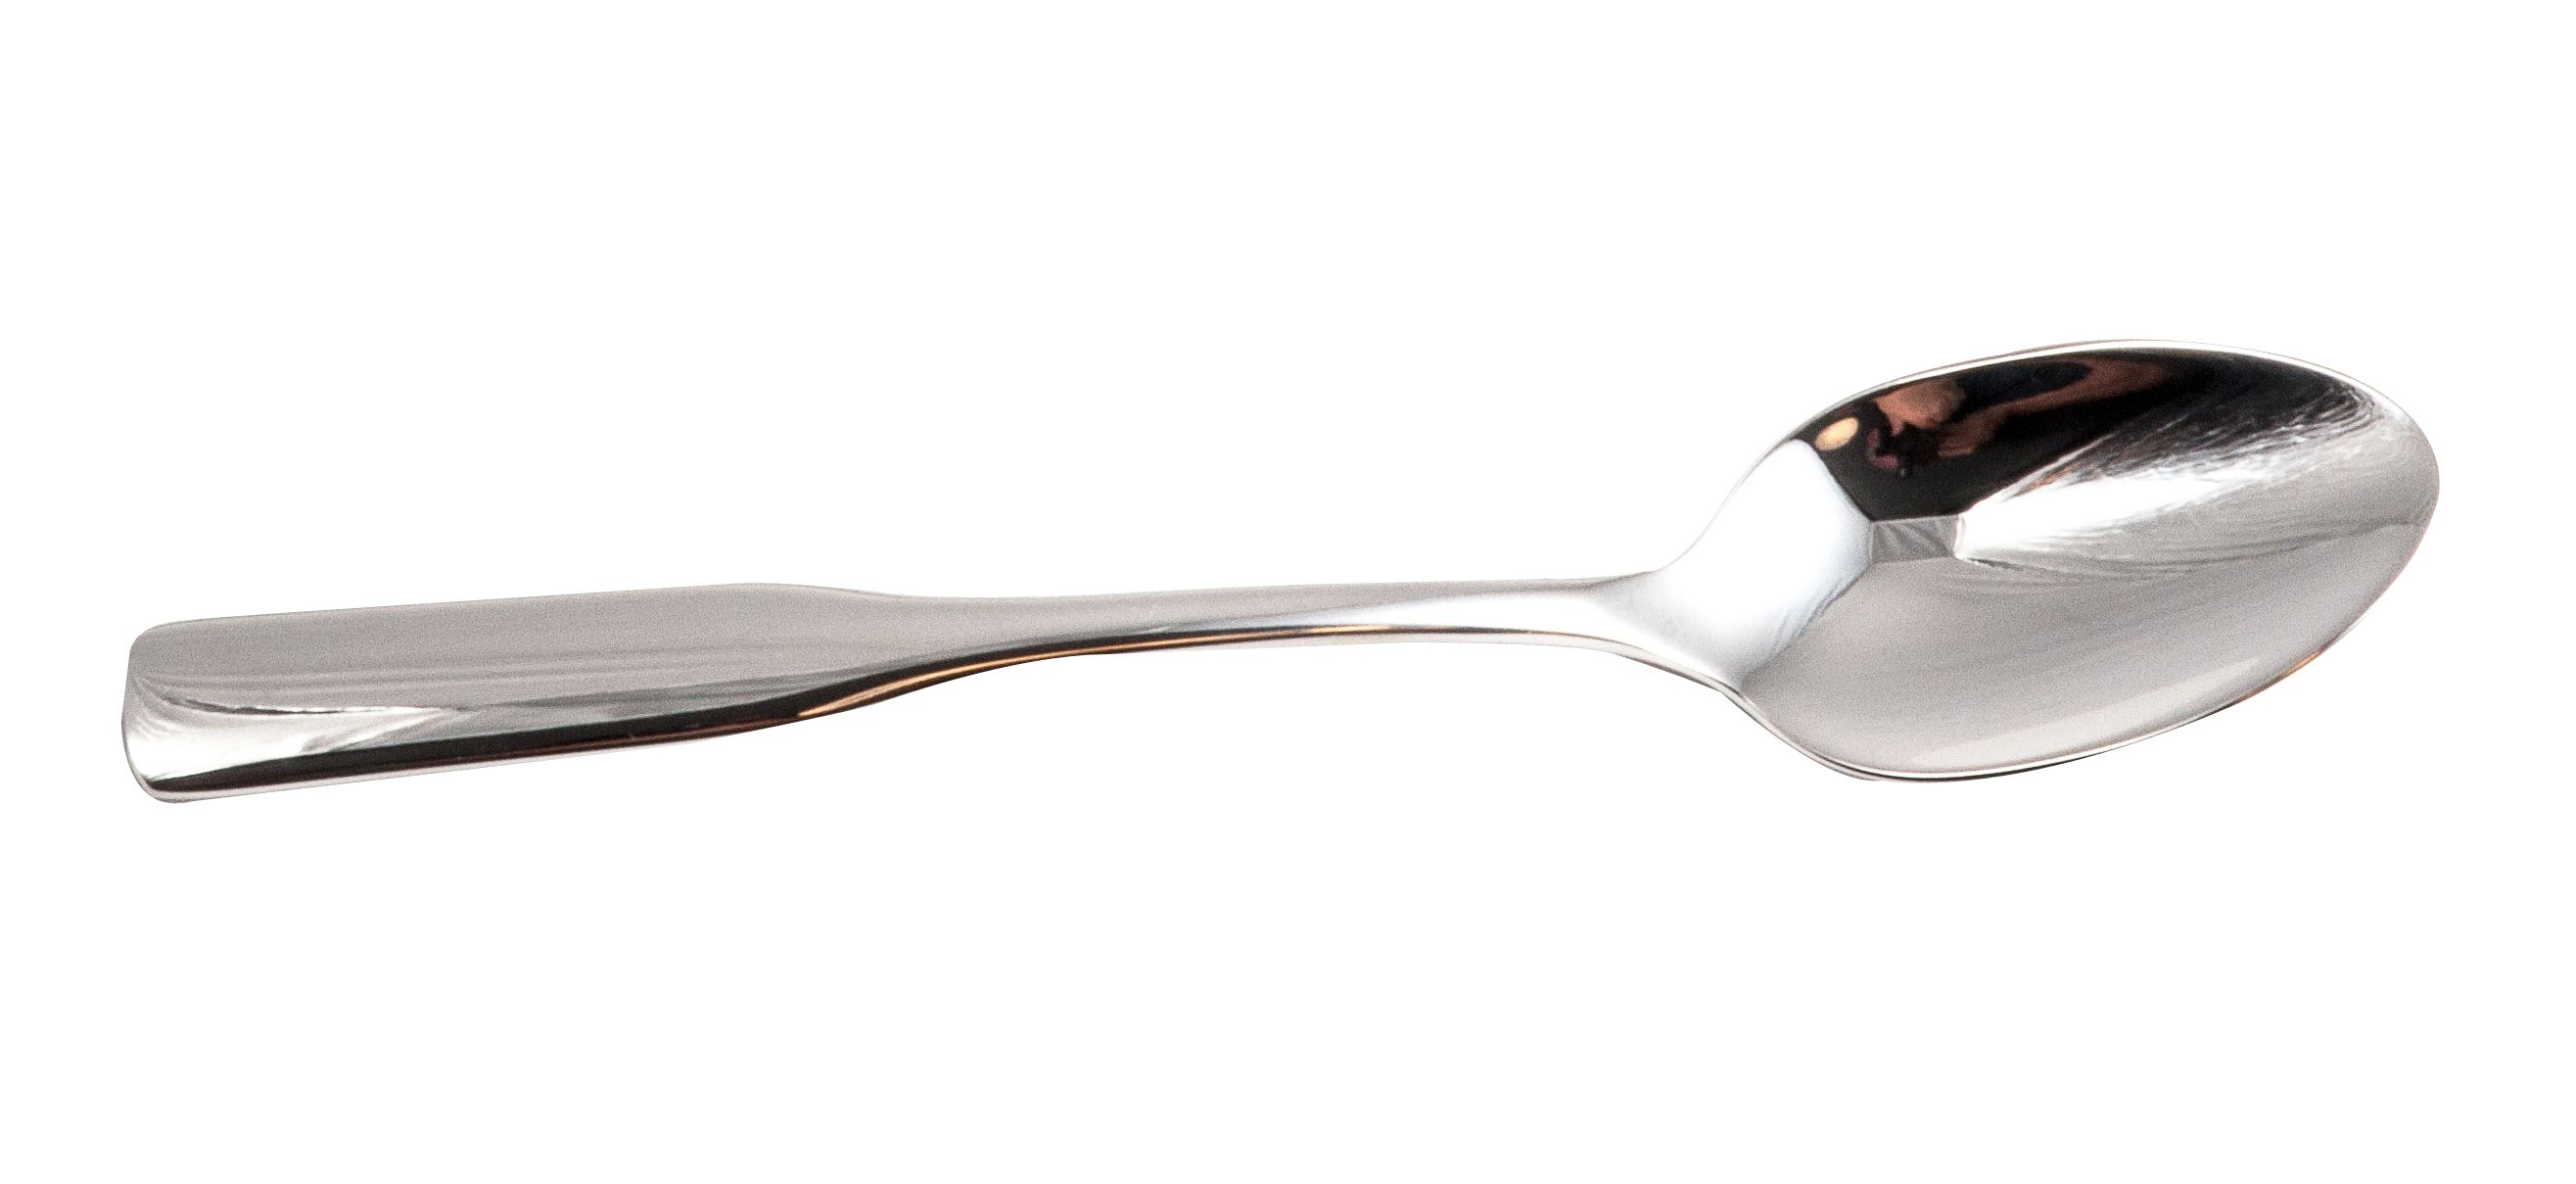 Spoon HD PNG - 119098